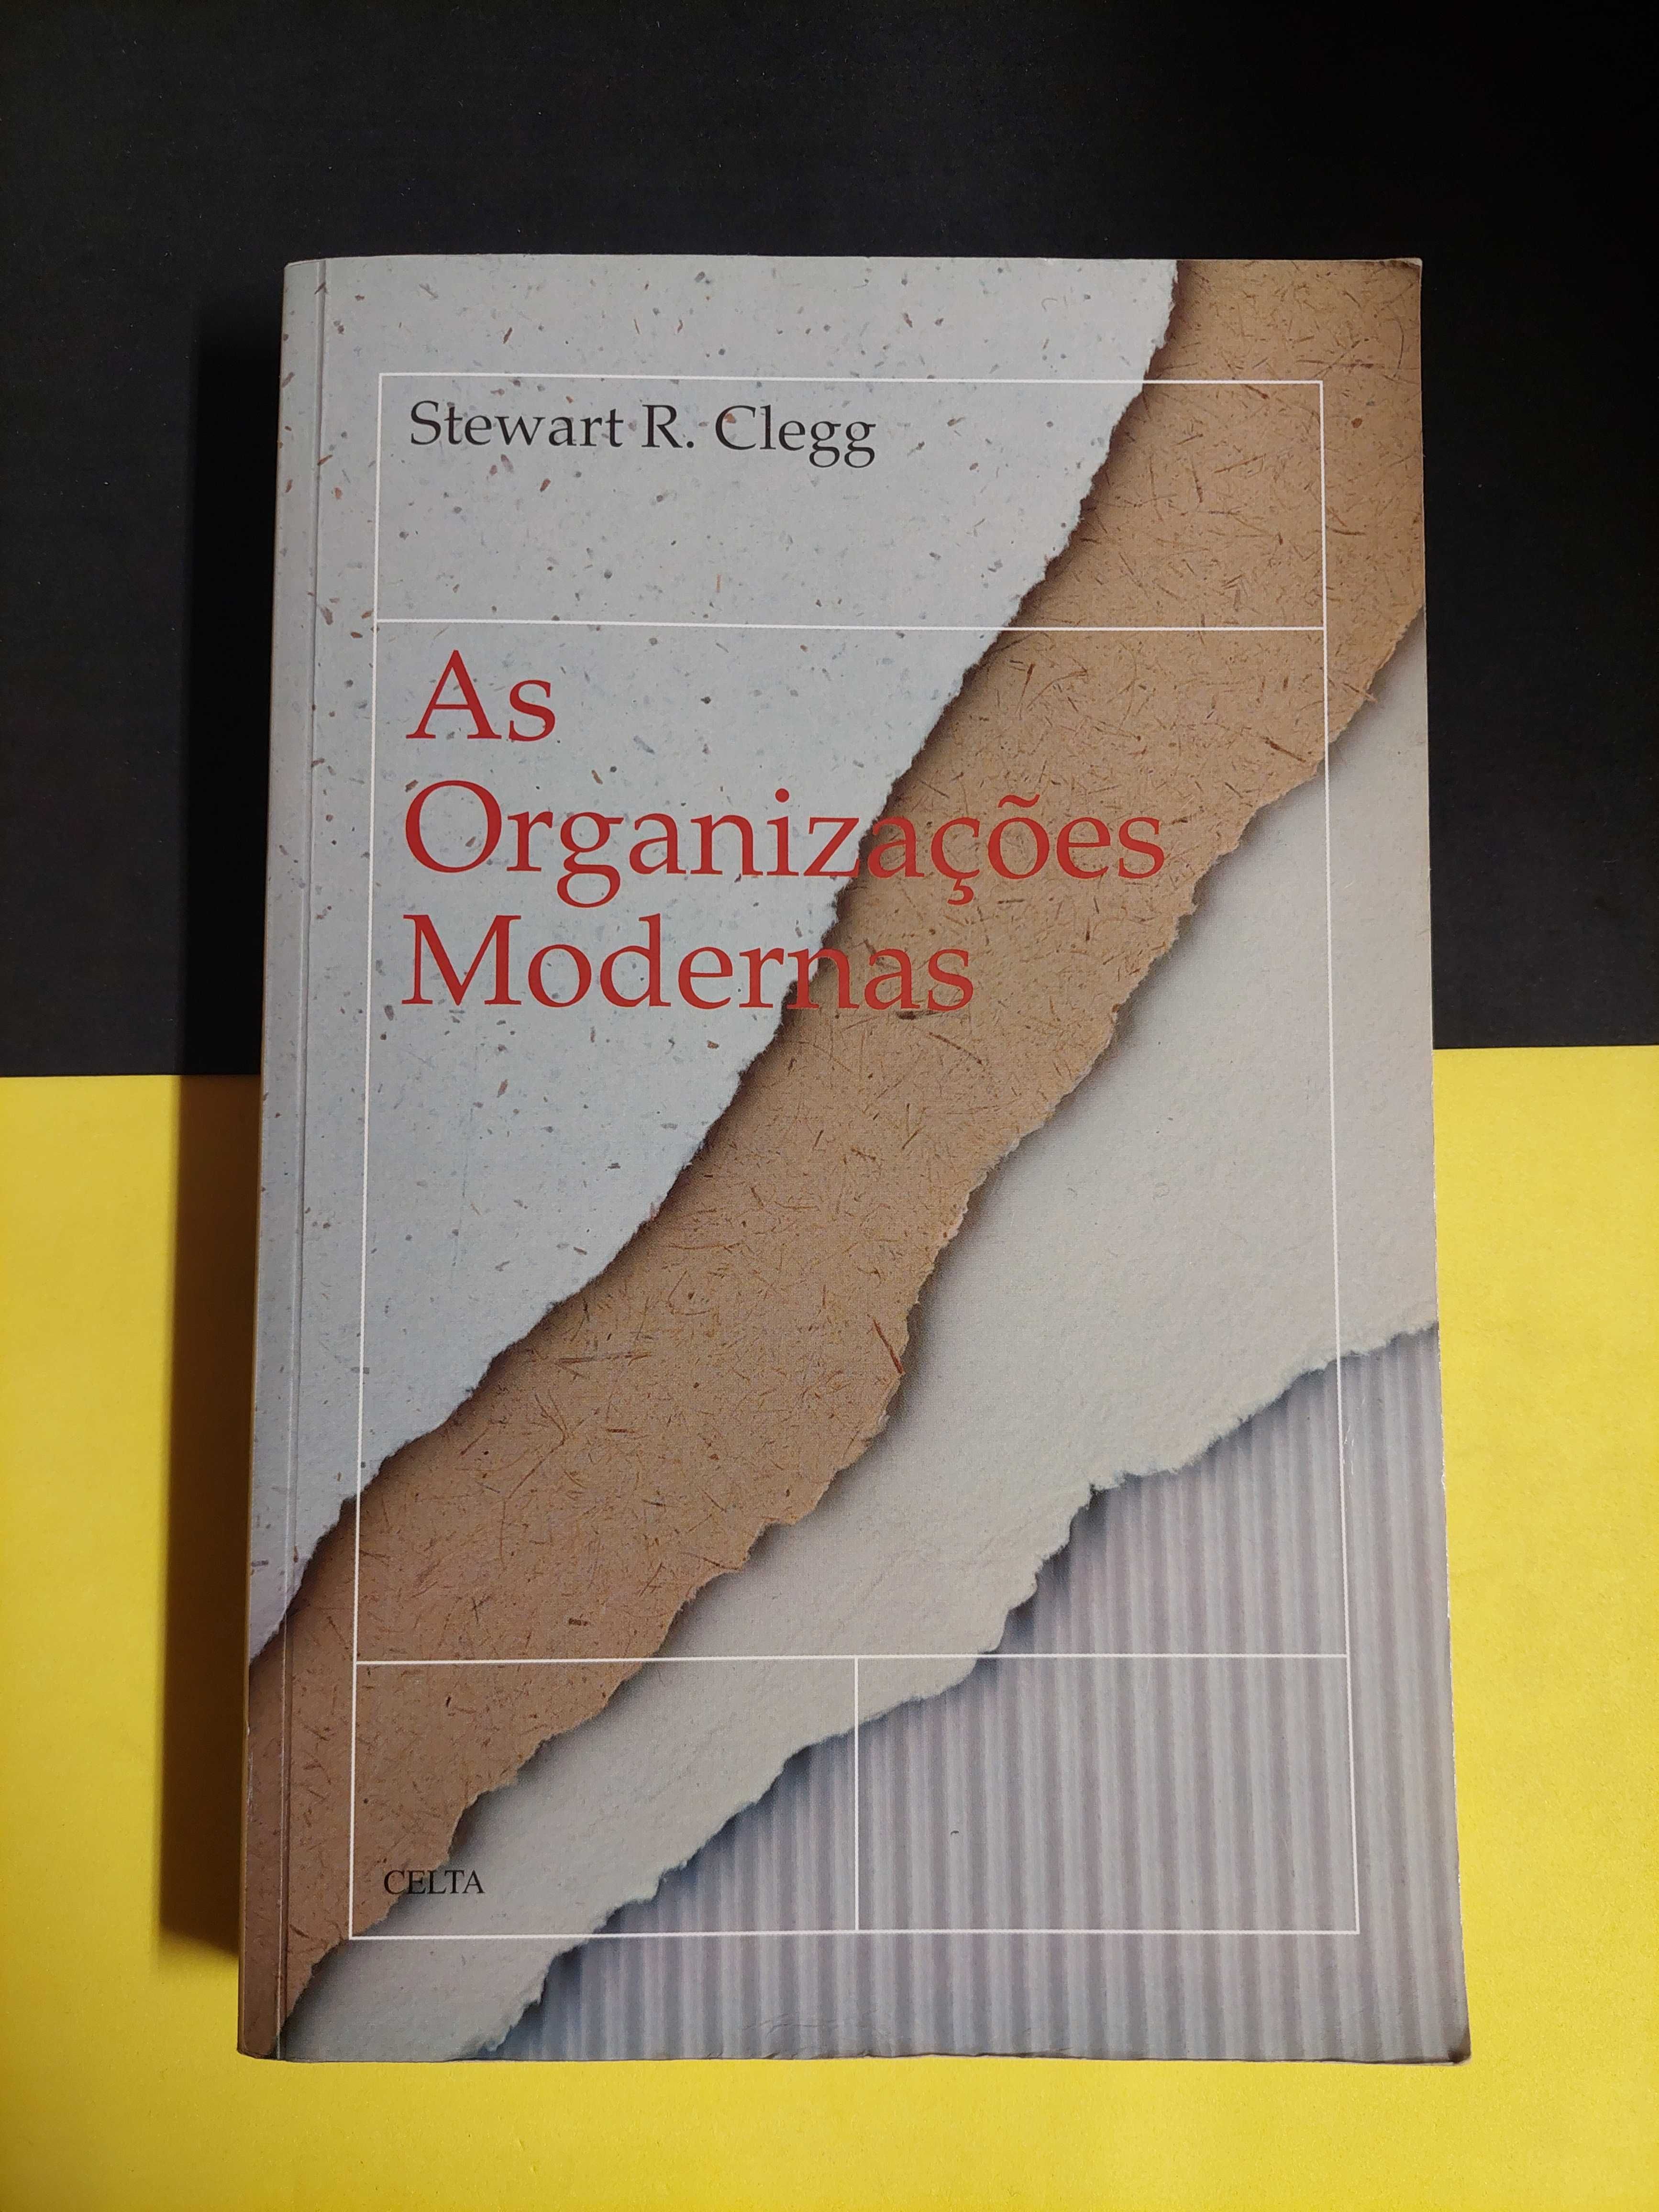 Stewart R. Clegg - As organizações modernas